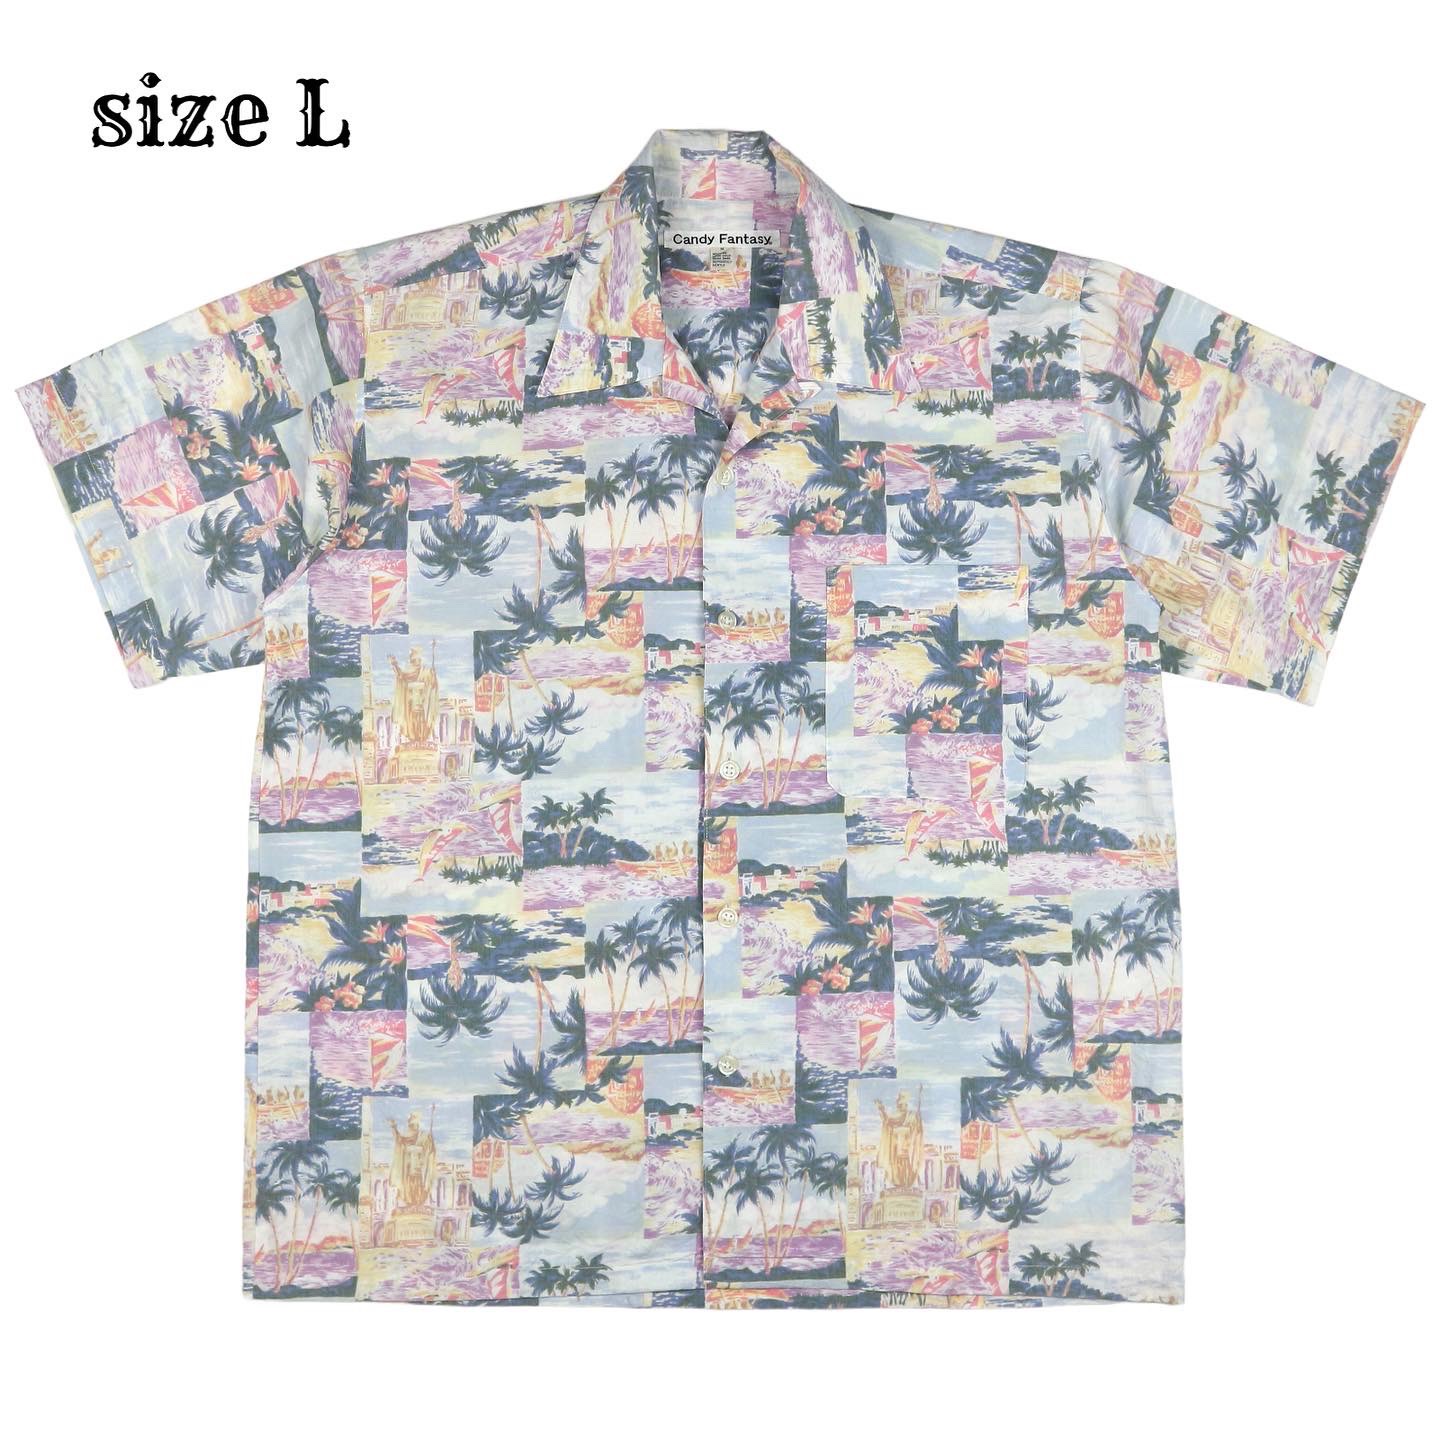 Candy Fantasy Hawaiian Shirt Size L